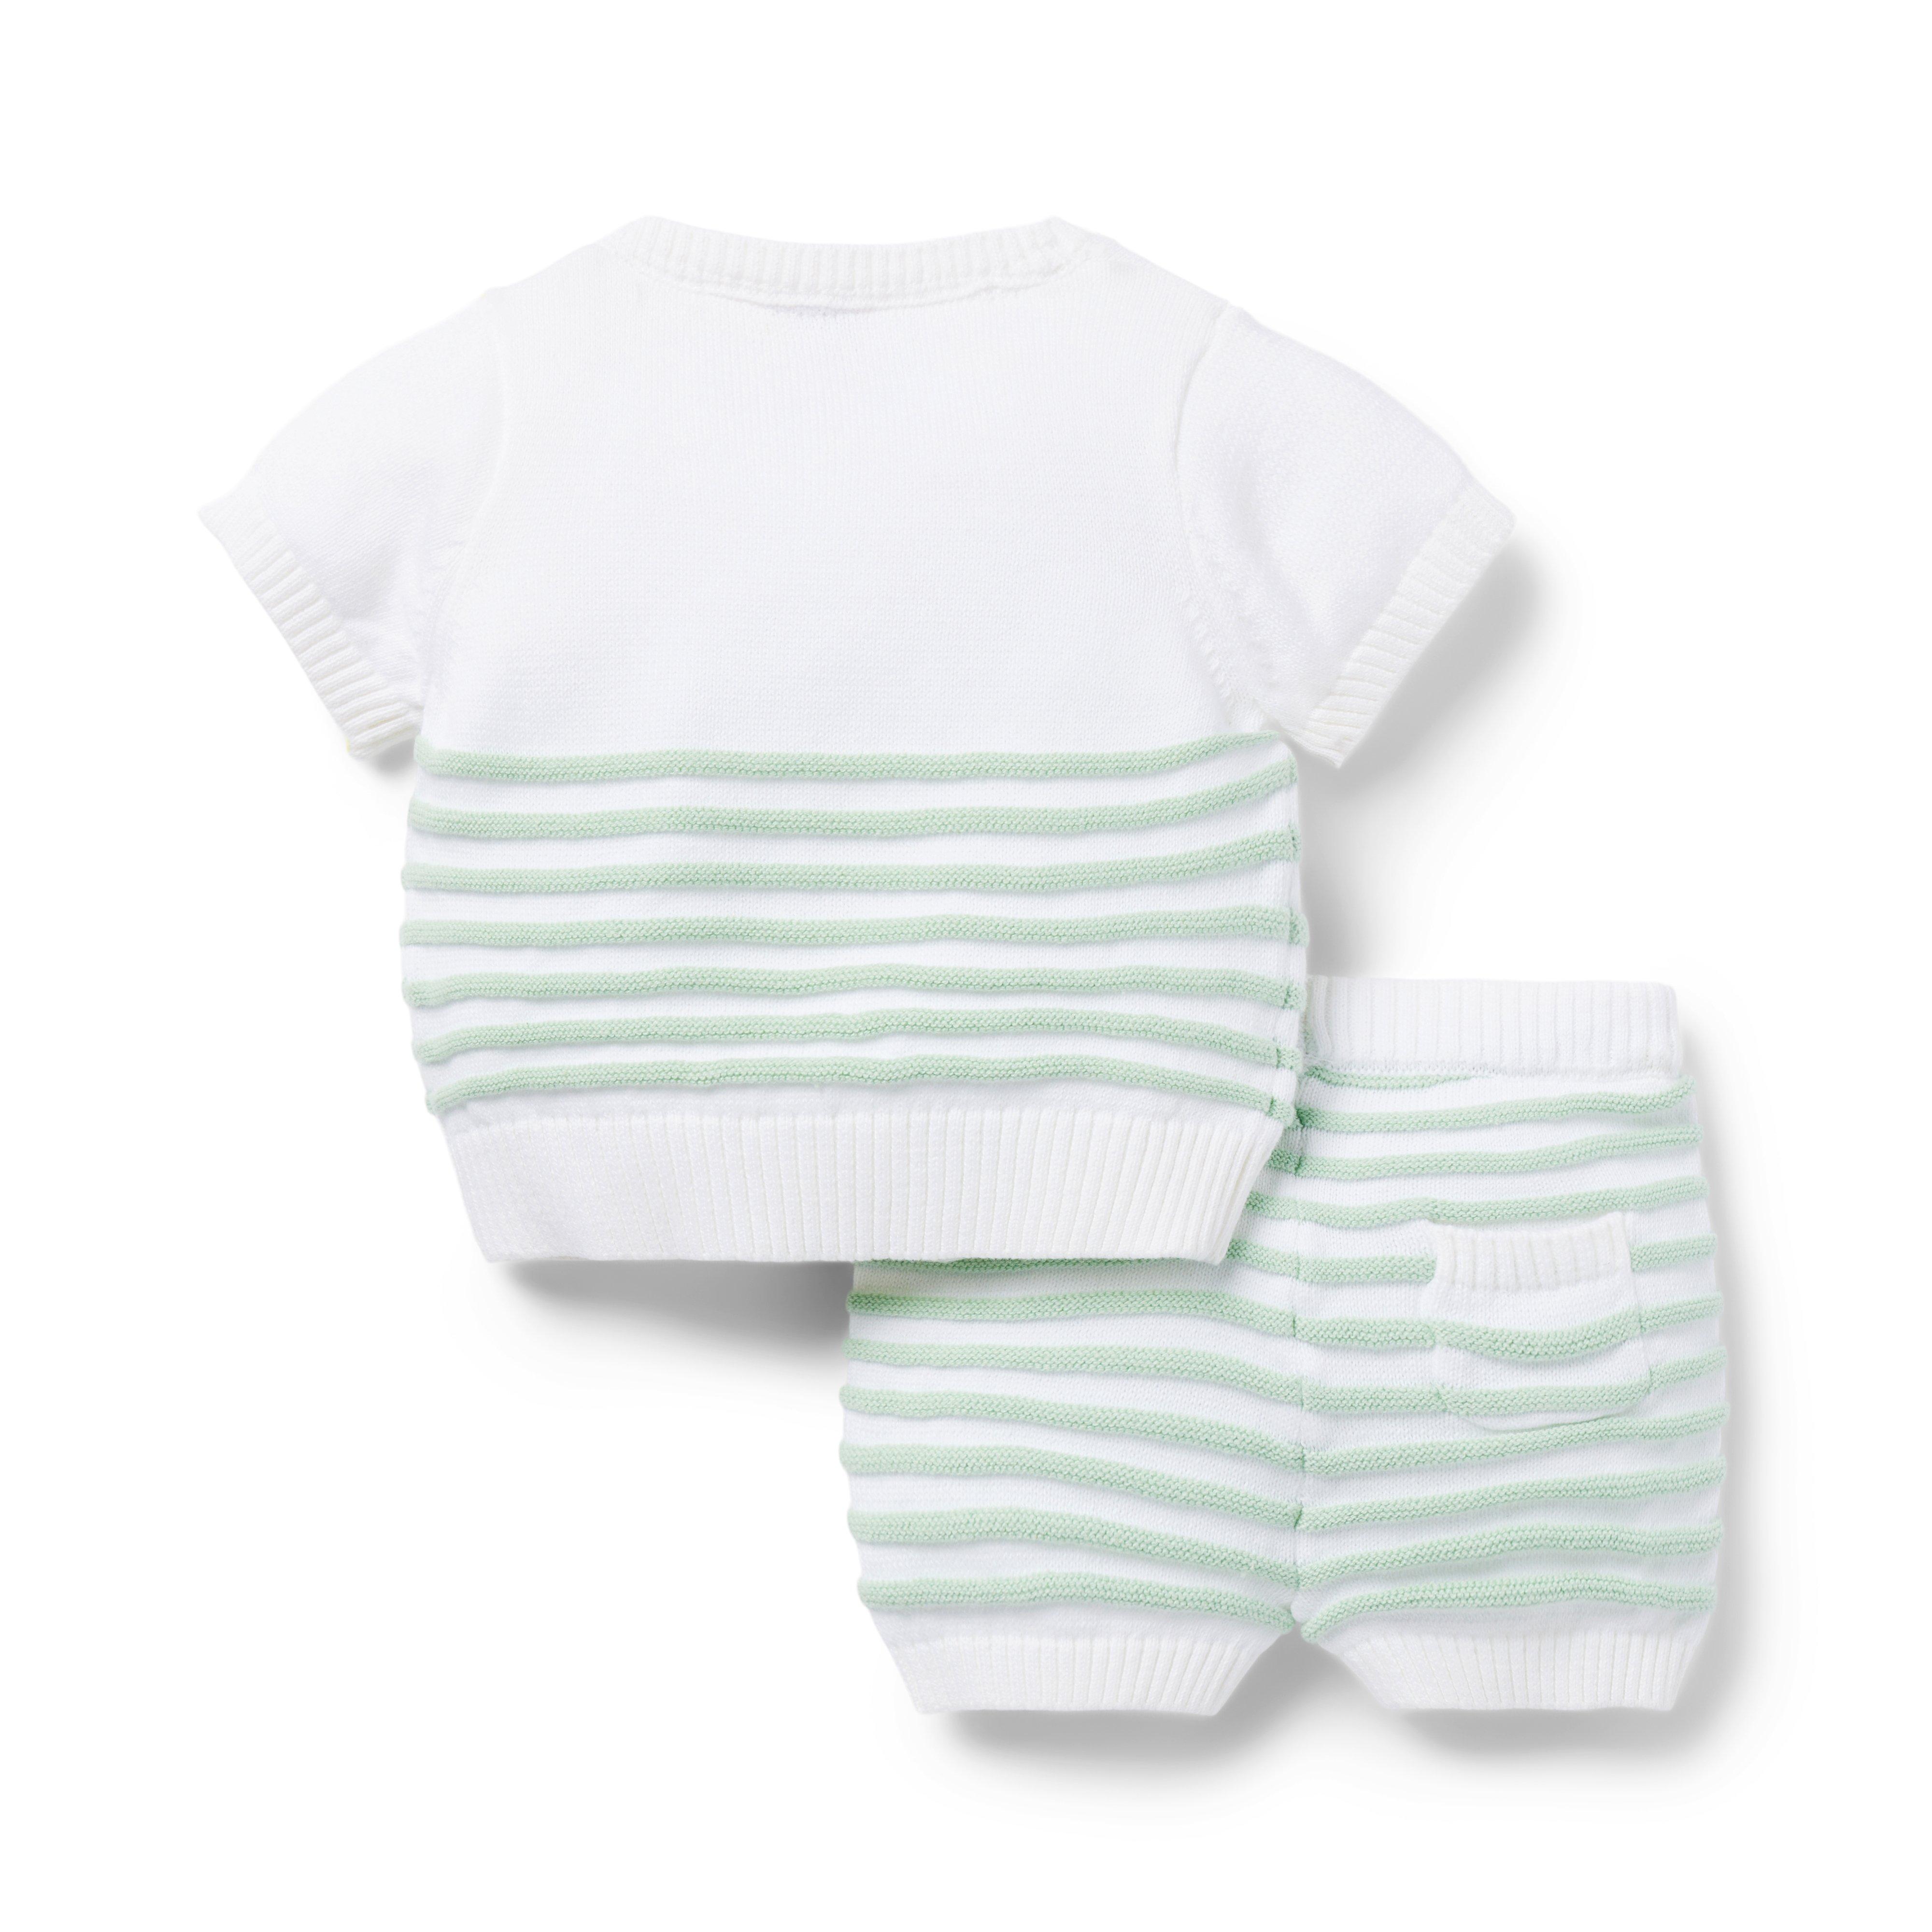 Newborn Aqua Stripe Baby Textured Striped Matching Set by Janie